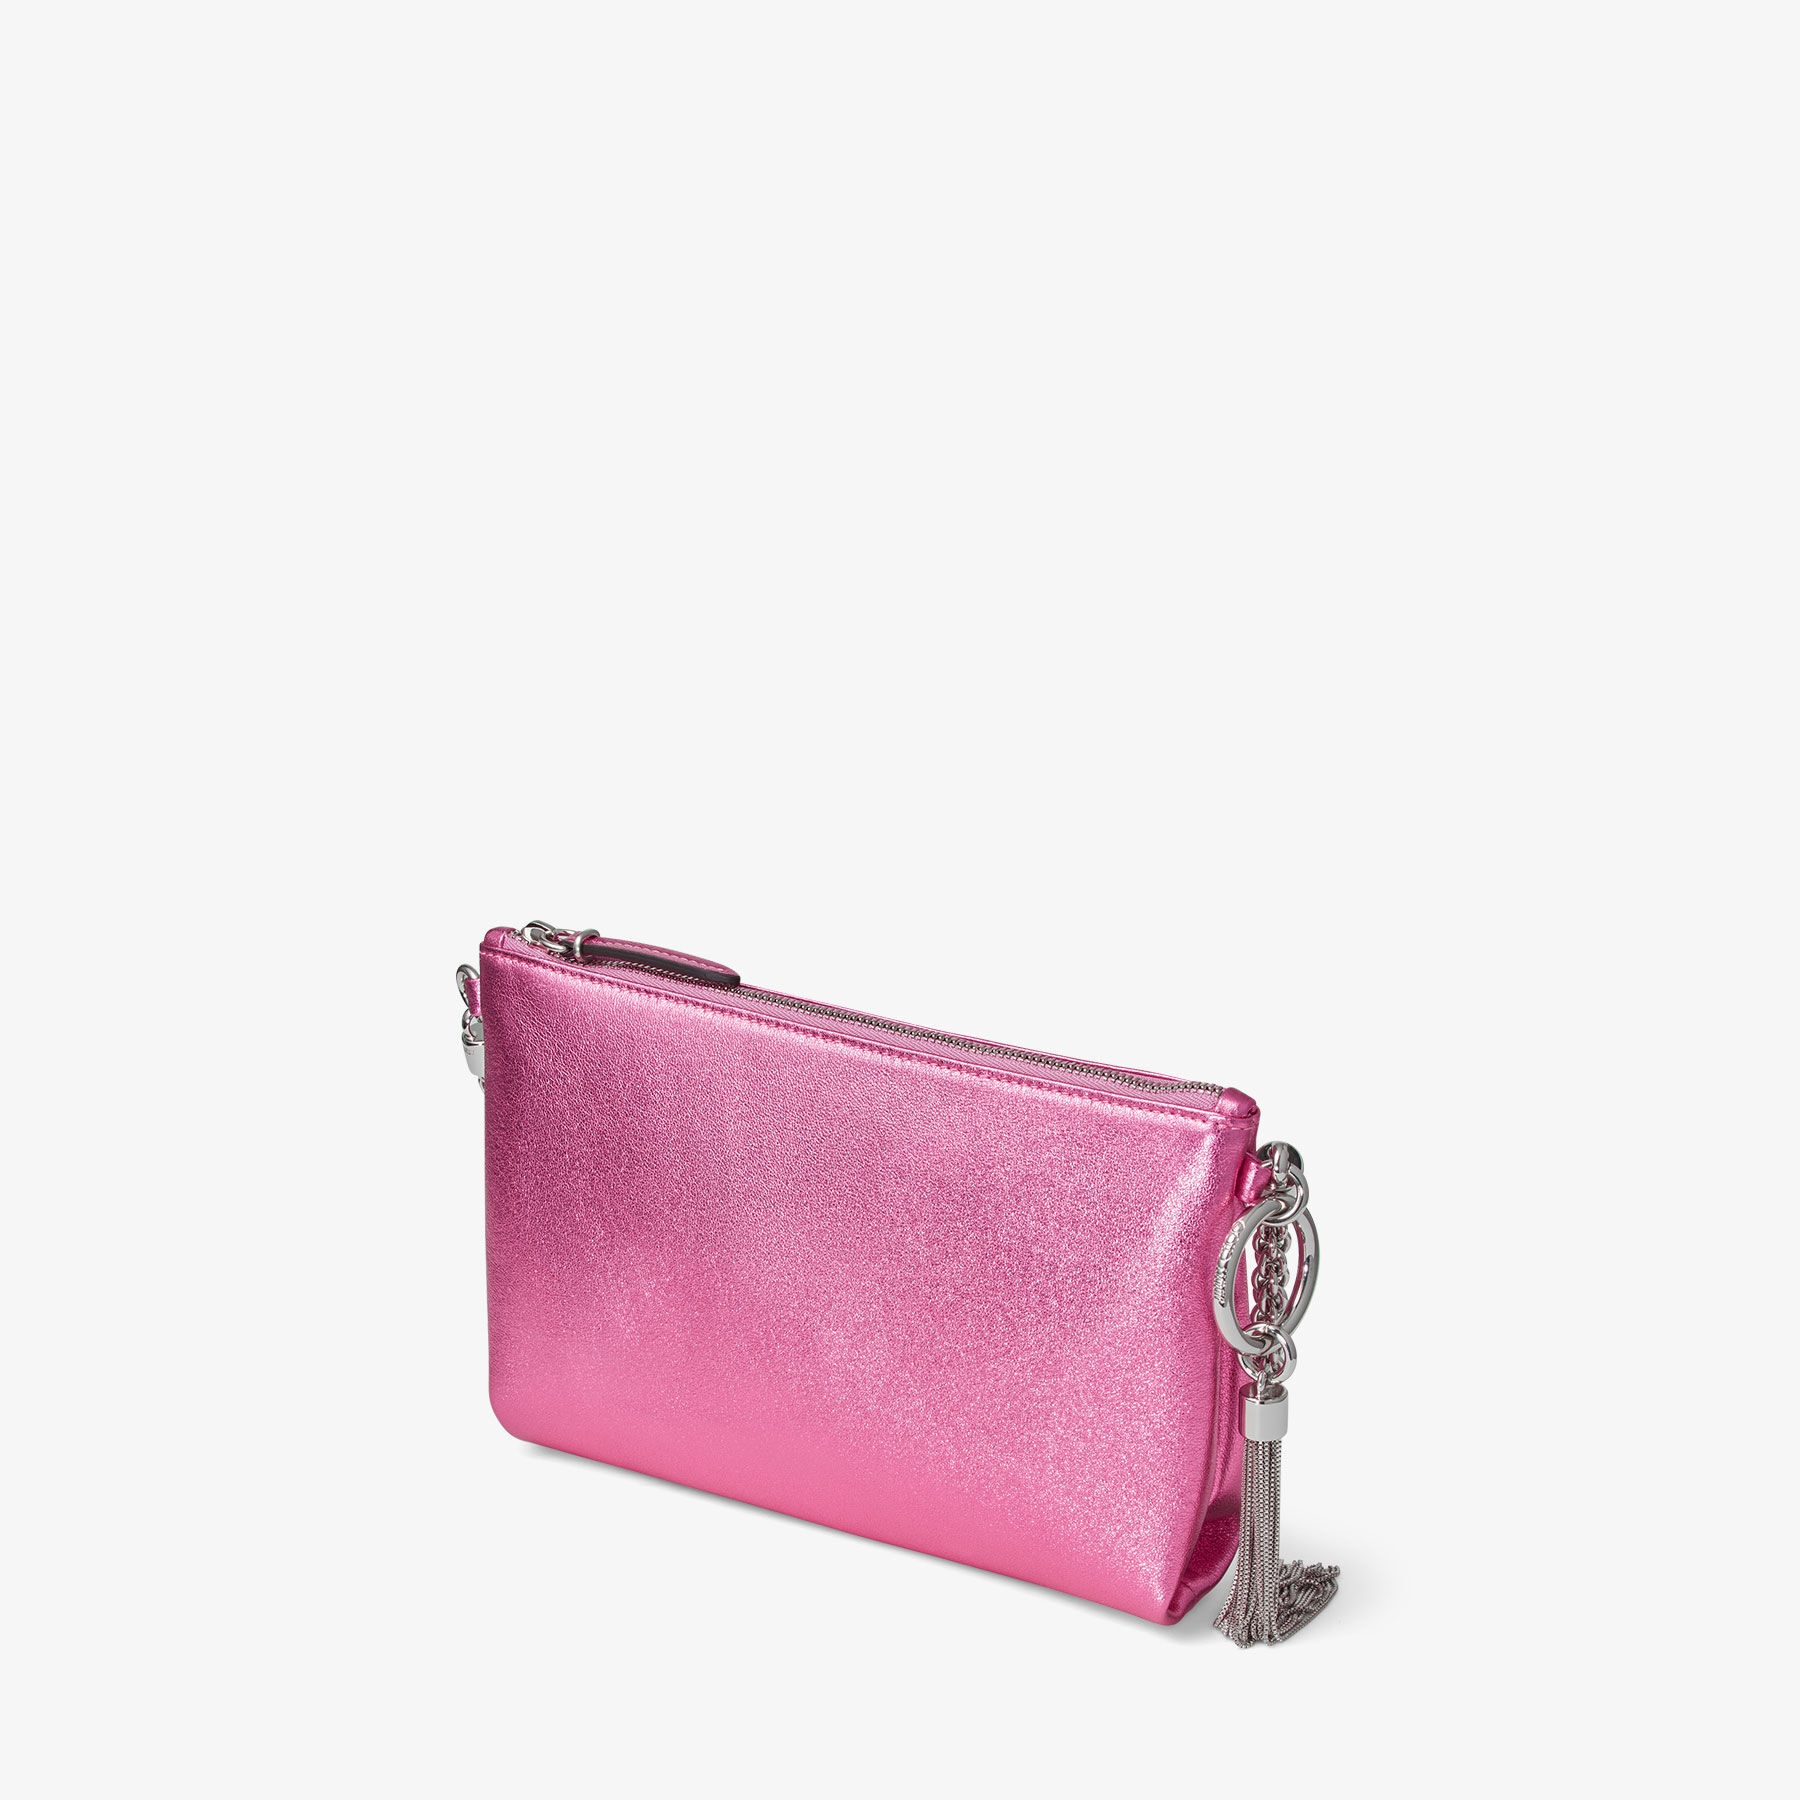 Callie Mini
Candy Pink Metallic Nappa Leather Mini Clutch Bag - 3